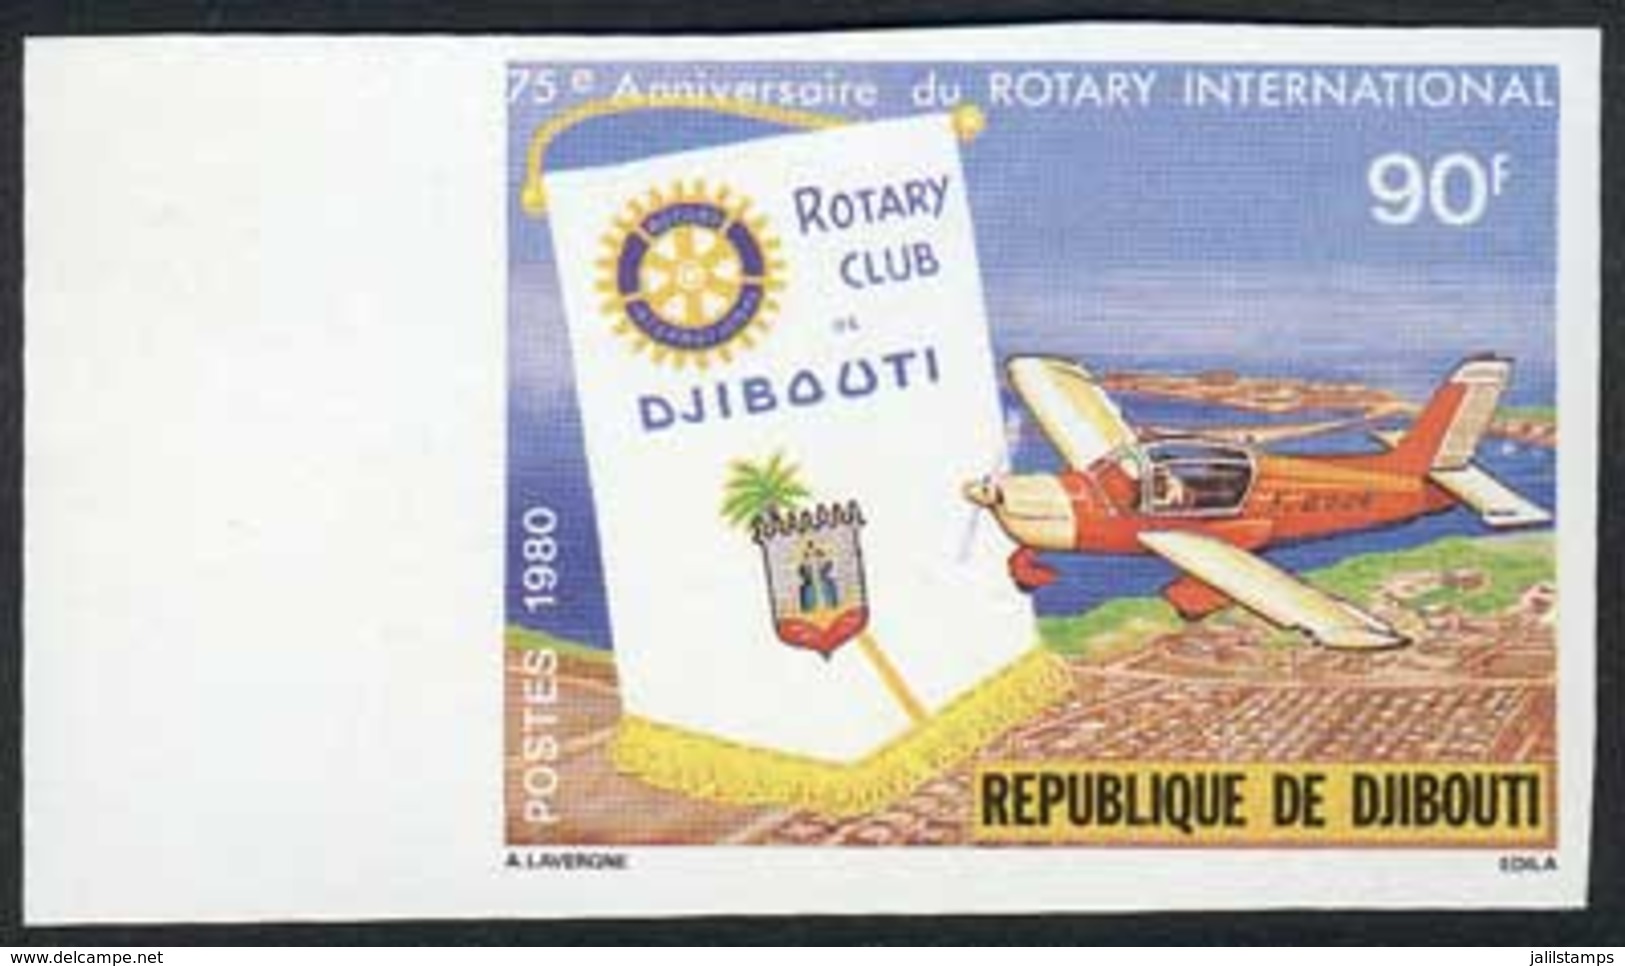 DJIBOUTI: Sc.509, 1980 Rotary International, IMPERFORATE Variety, VF Quality! - Djibouti (1977-...)